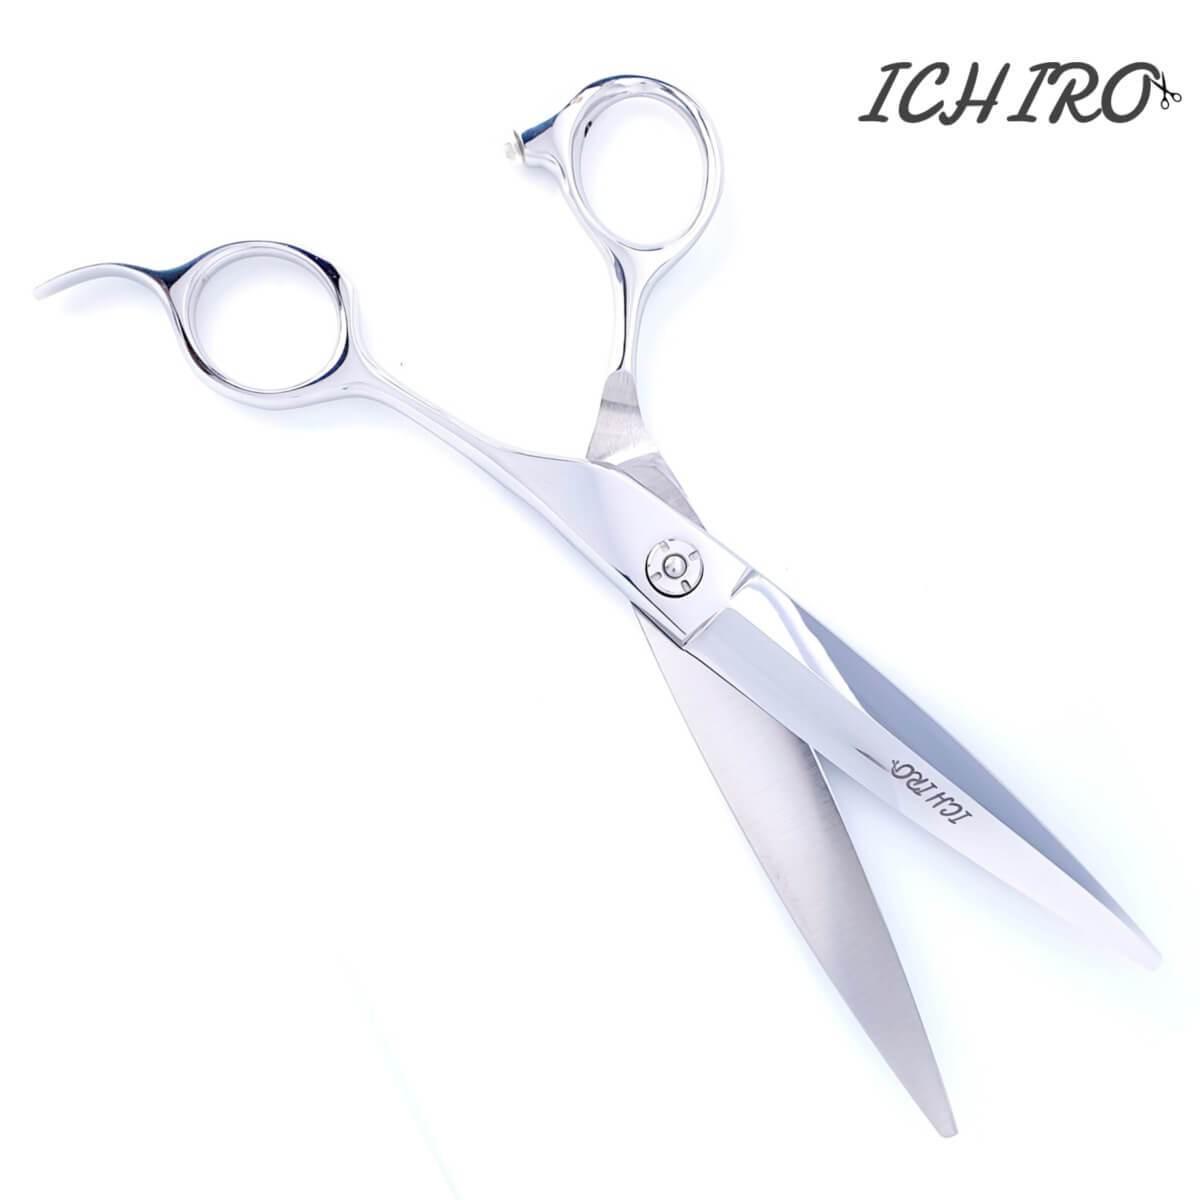 Ichiro Katana Barber Shear - Japan Scissors